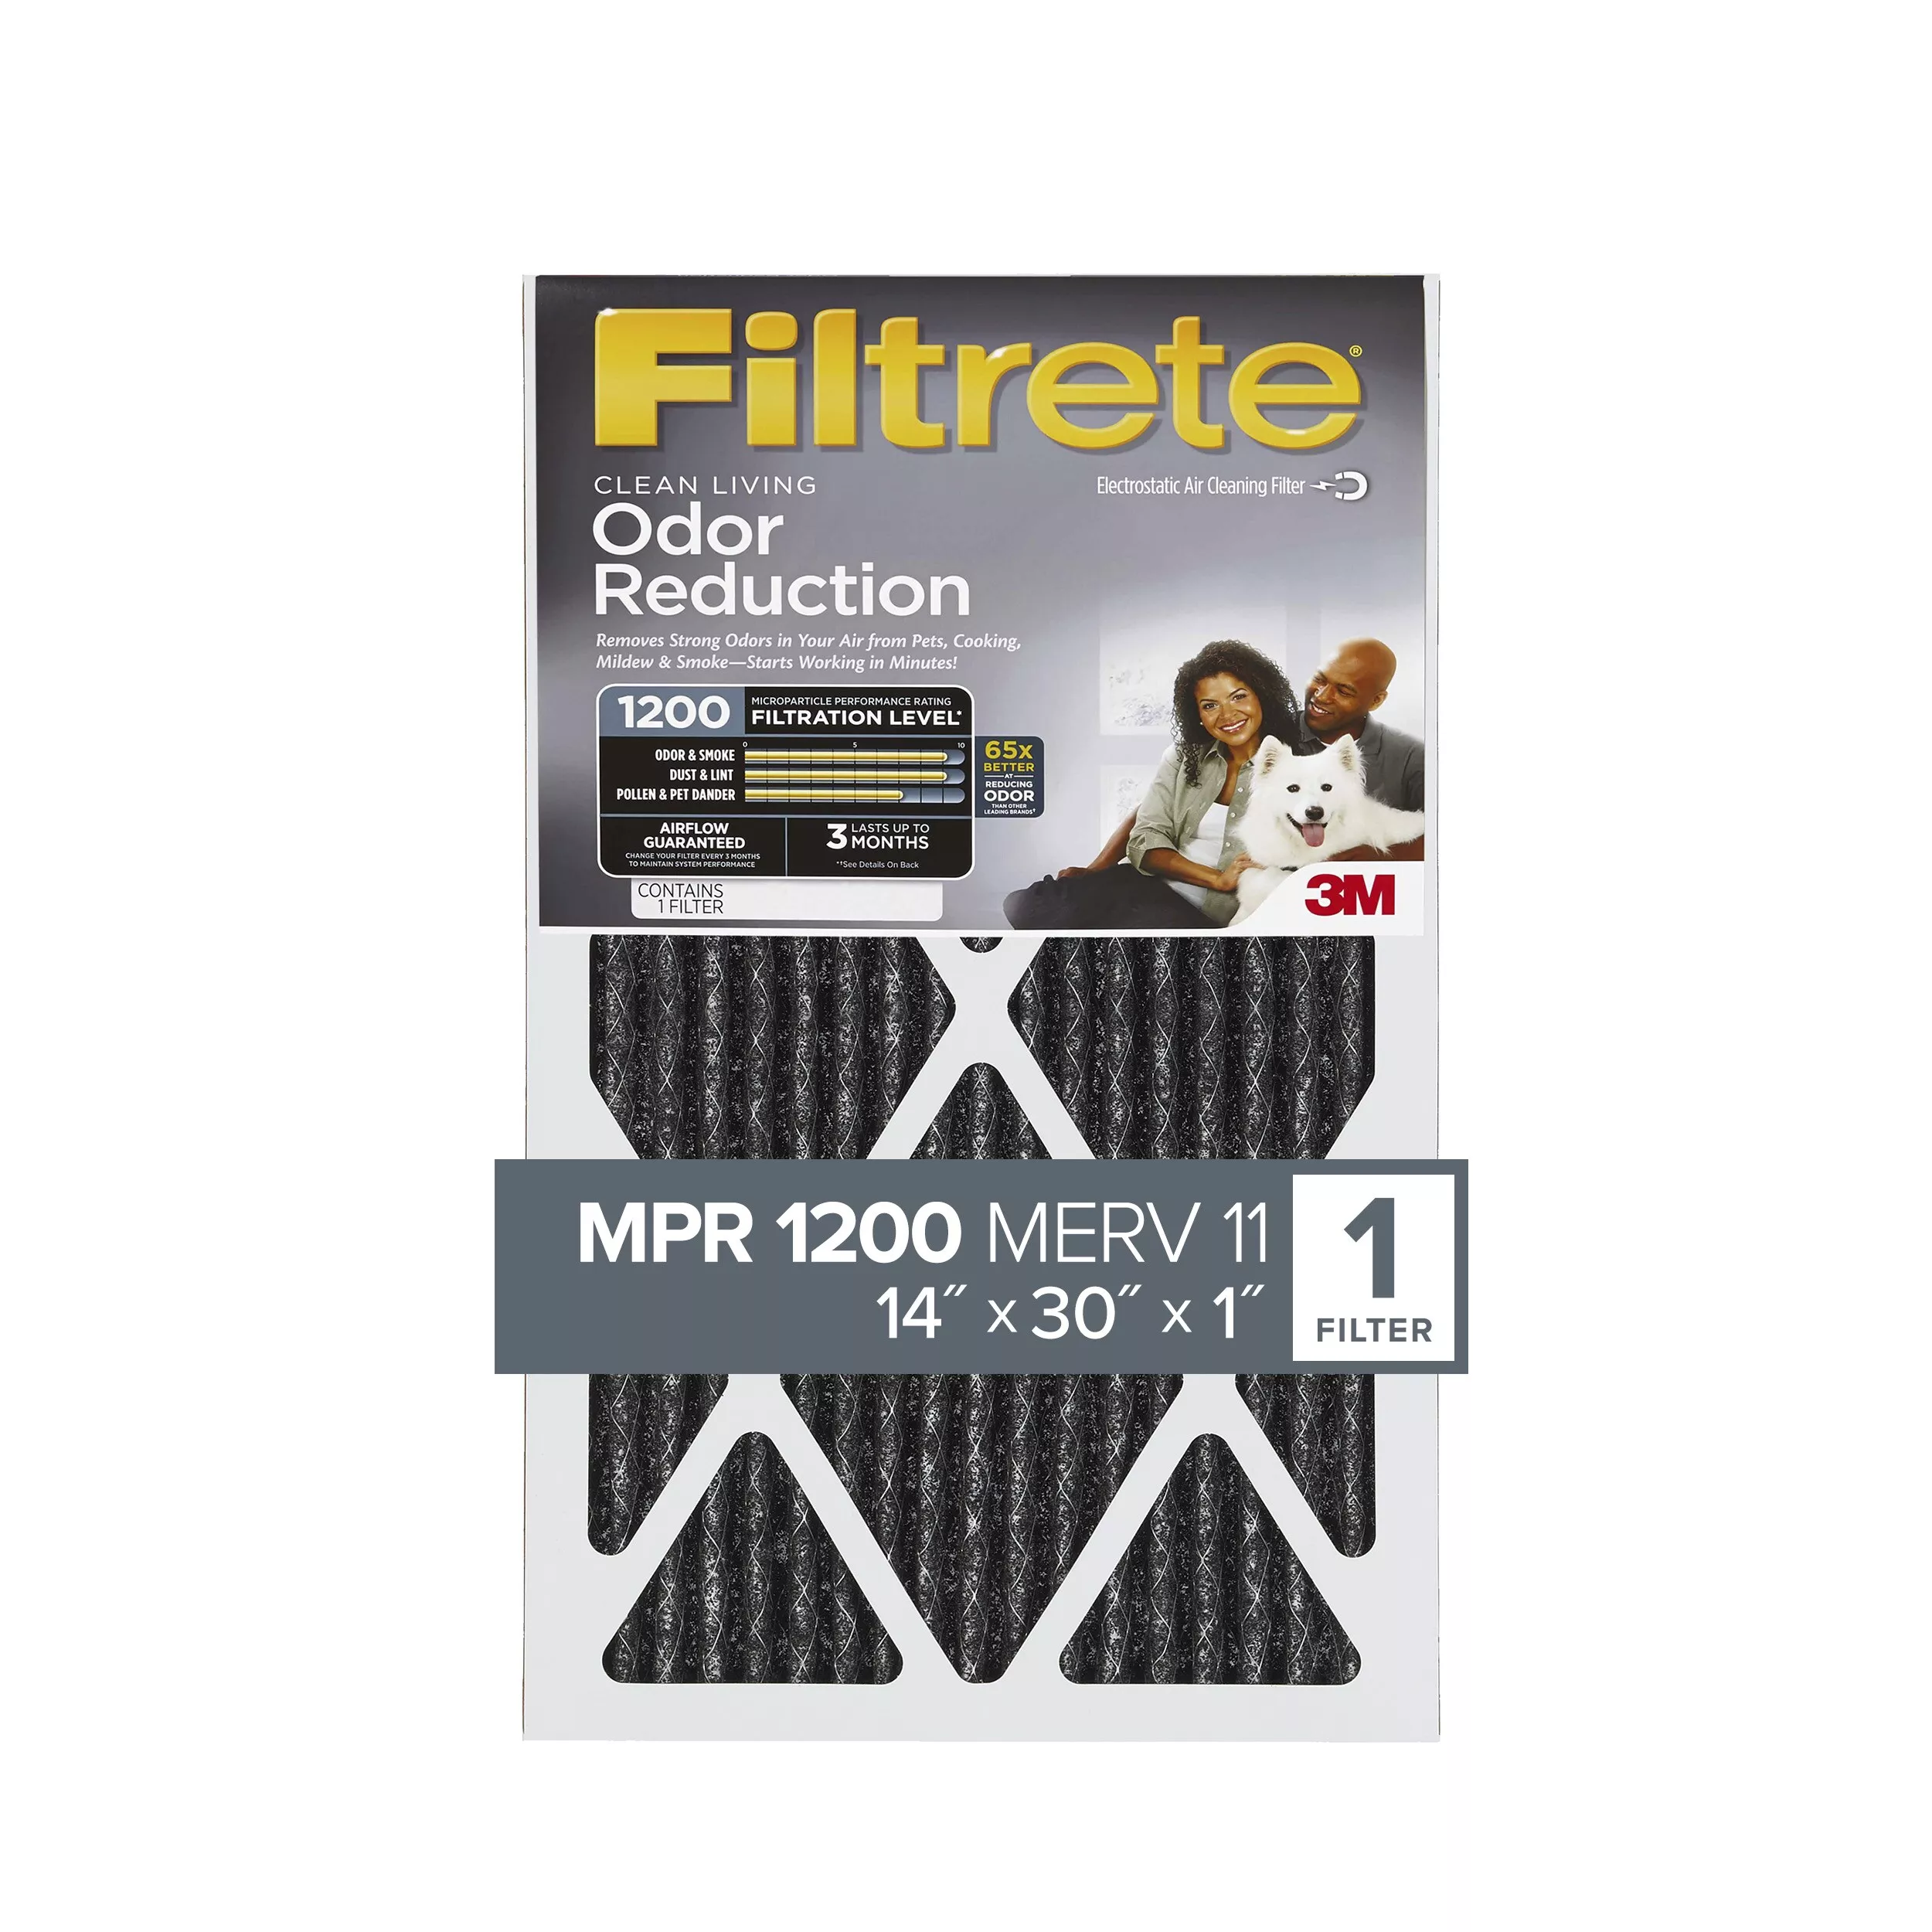 Filtrete™ Home Odor Reduction Filter HOME24-4, 14 in x 30 in x 1 in
(35.5 cm x 76.2 cm x 2.5 cm)